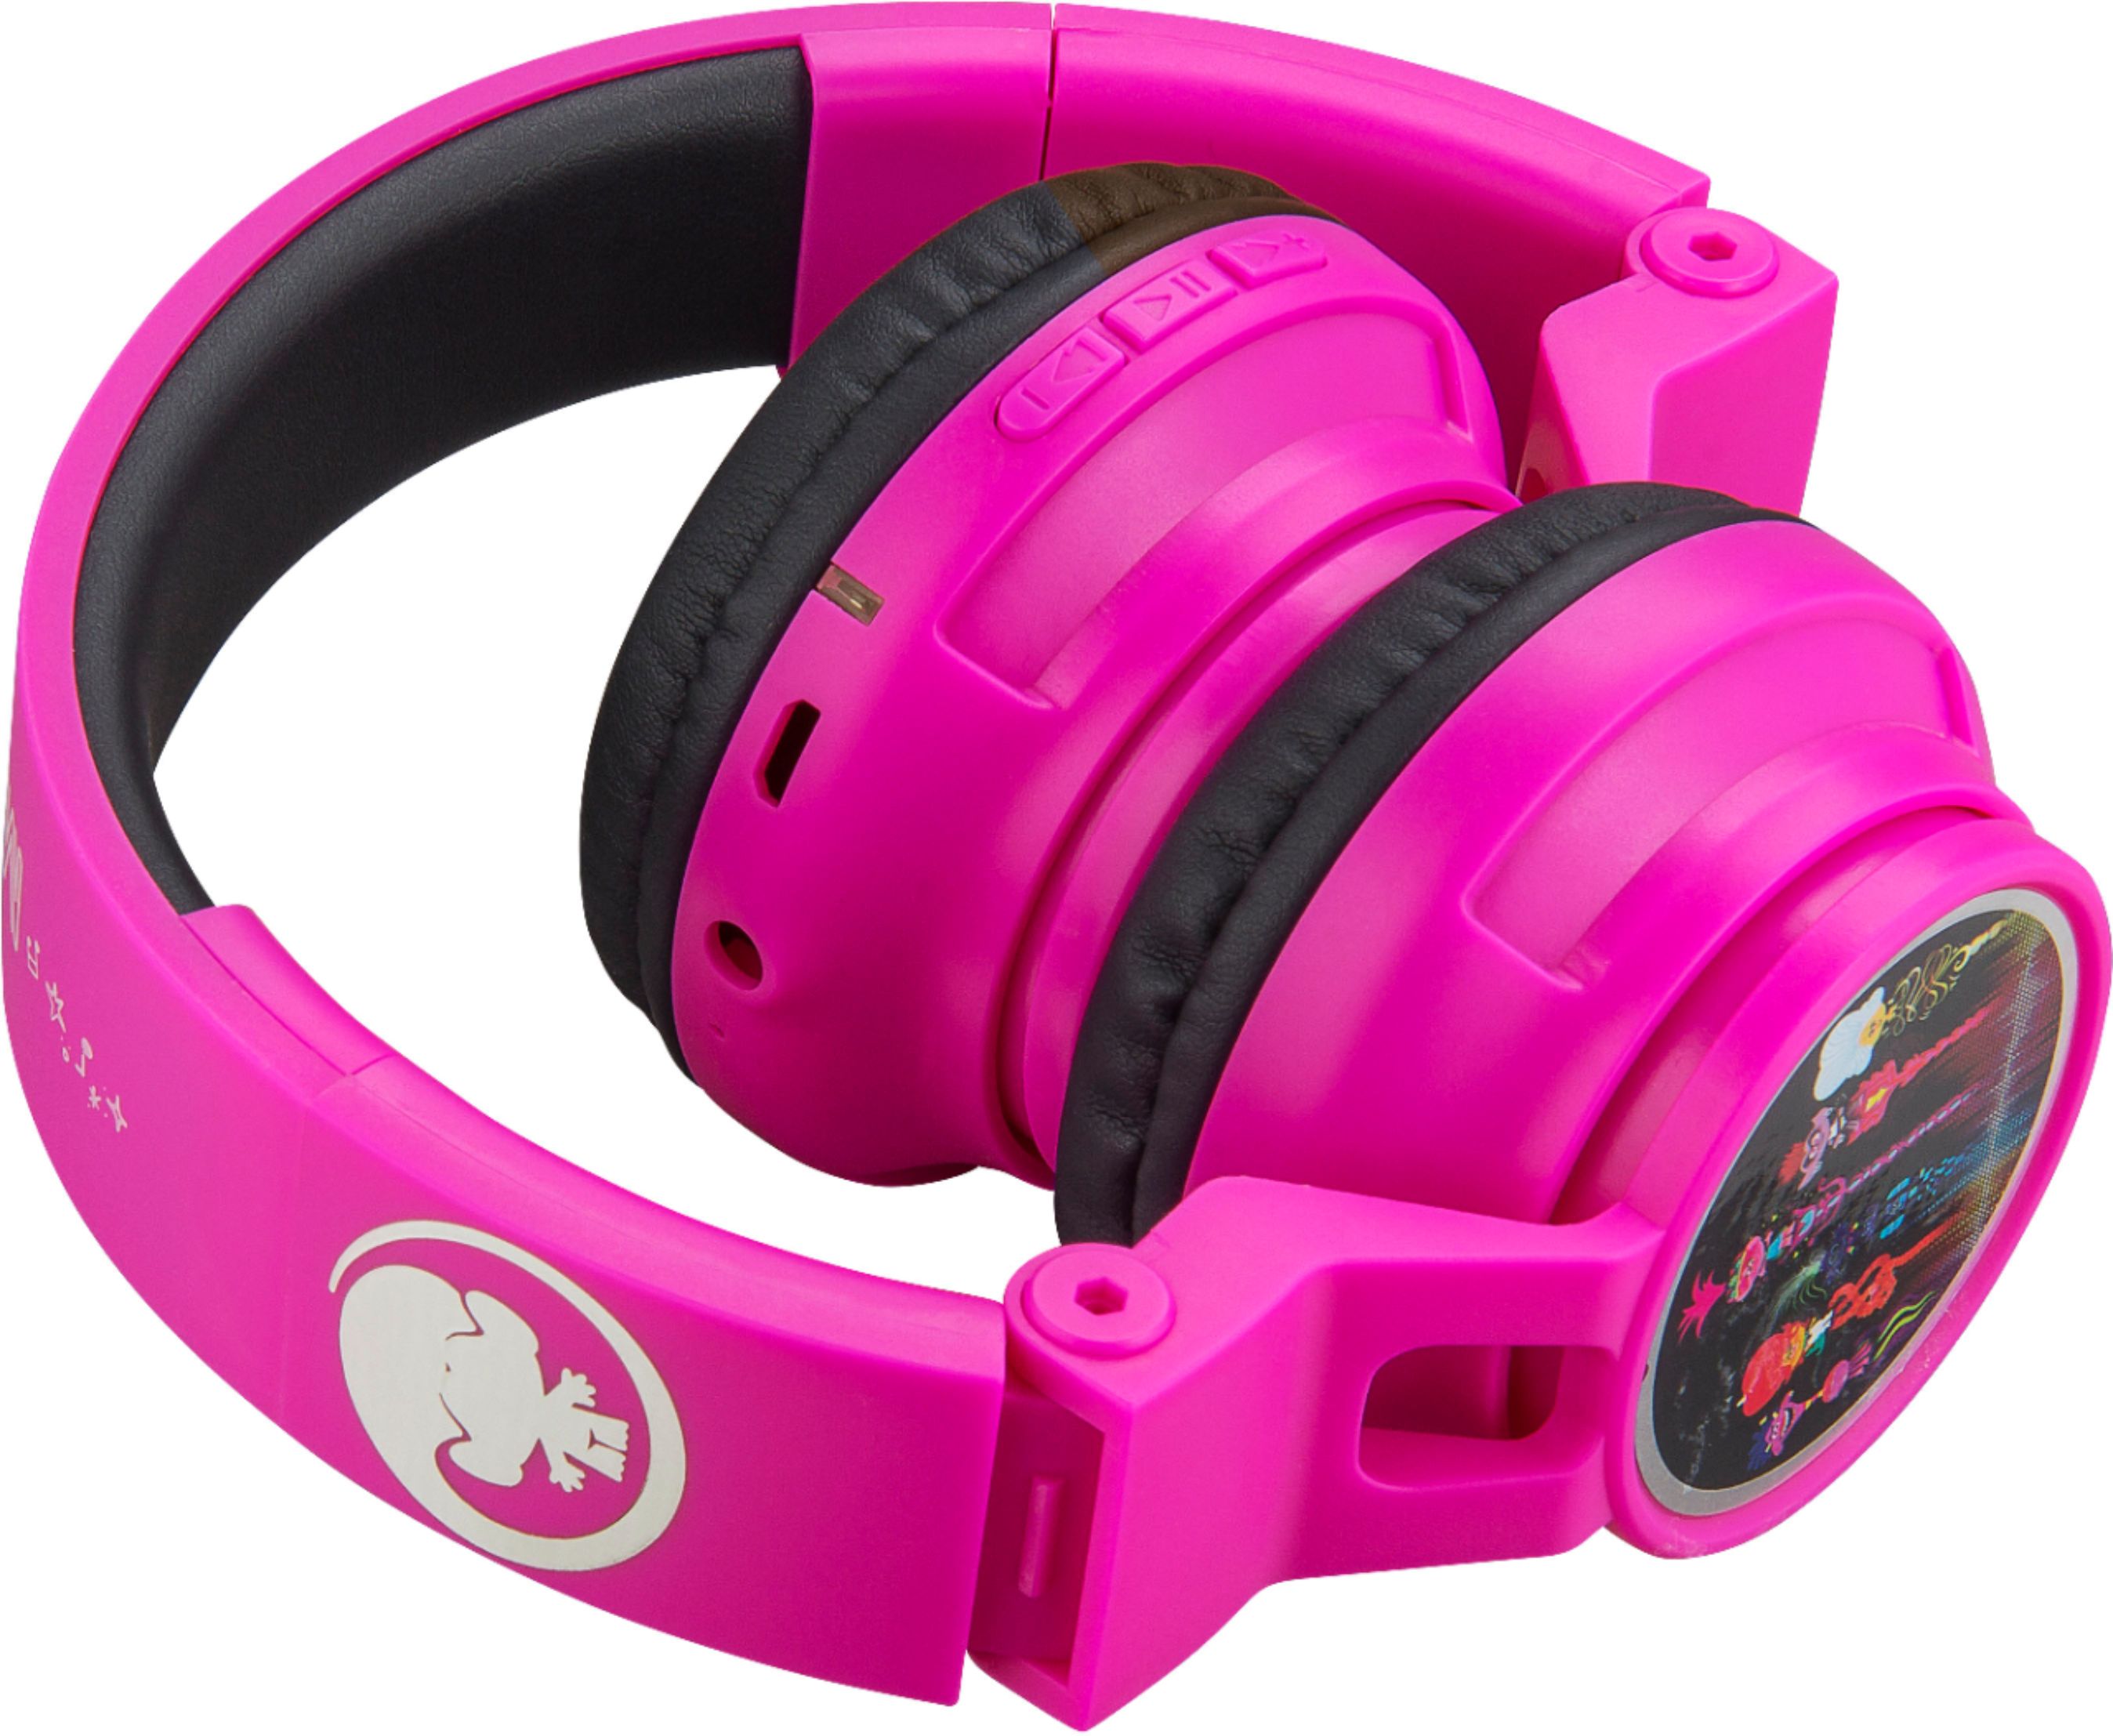 Trolls Tour World Buy: Headphones Over-the-Ear Pink/Black Wireless Best